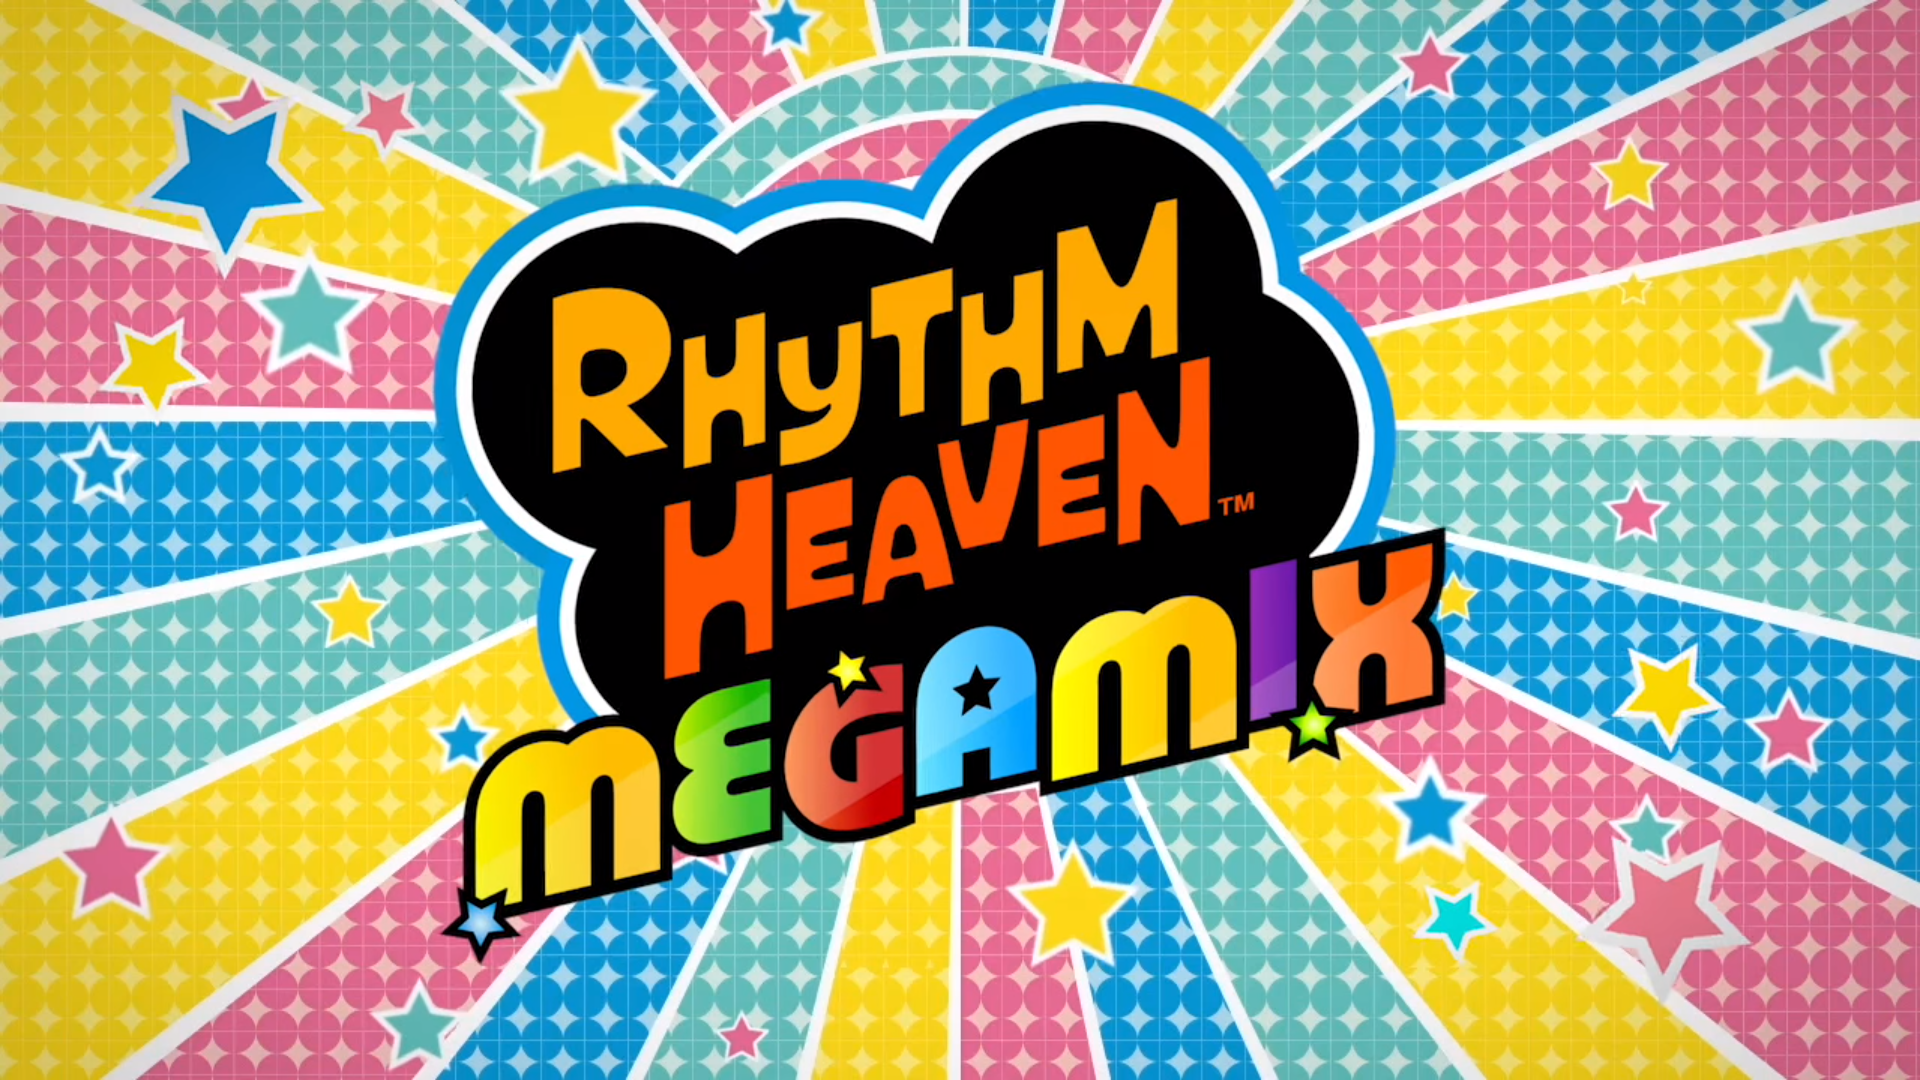 Image for Rhythm Heaven Megamix hits Nintendo eShop today. European release date announced